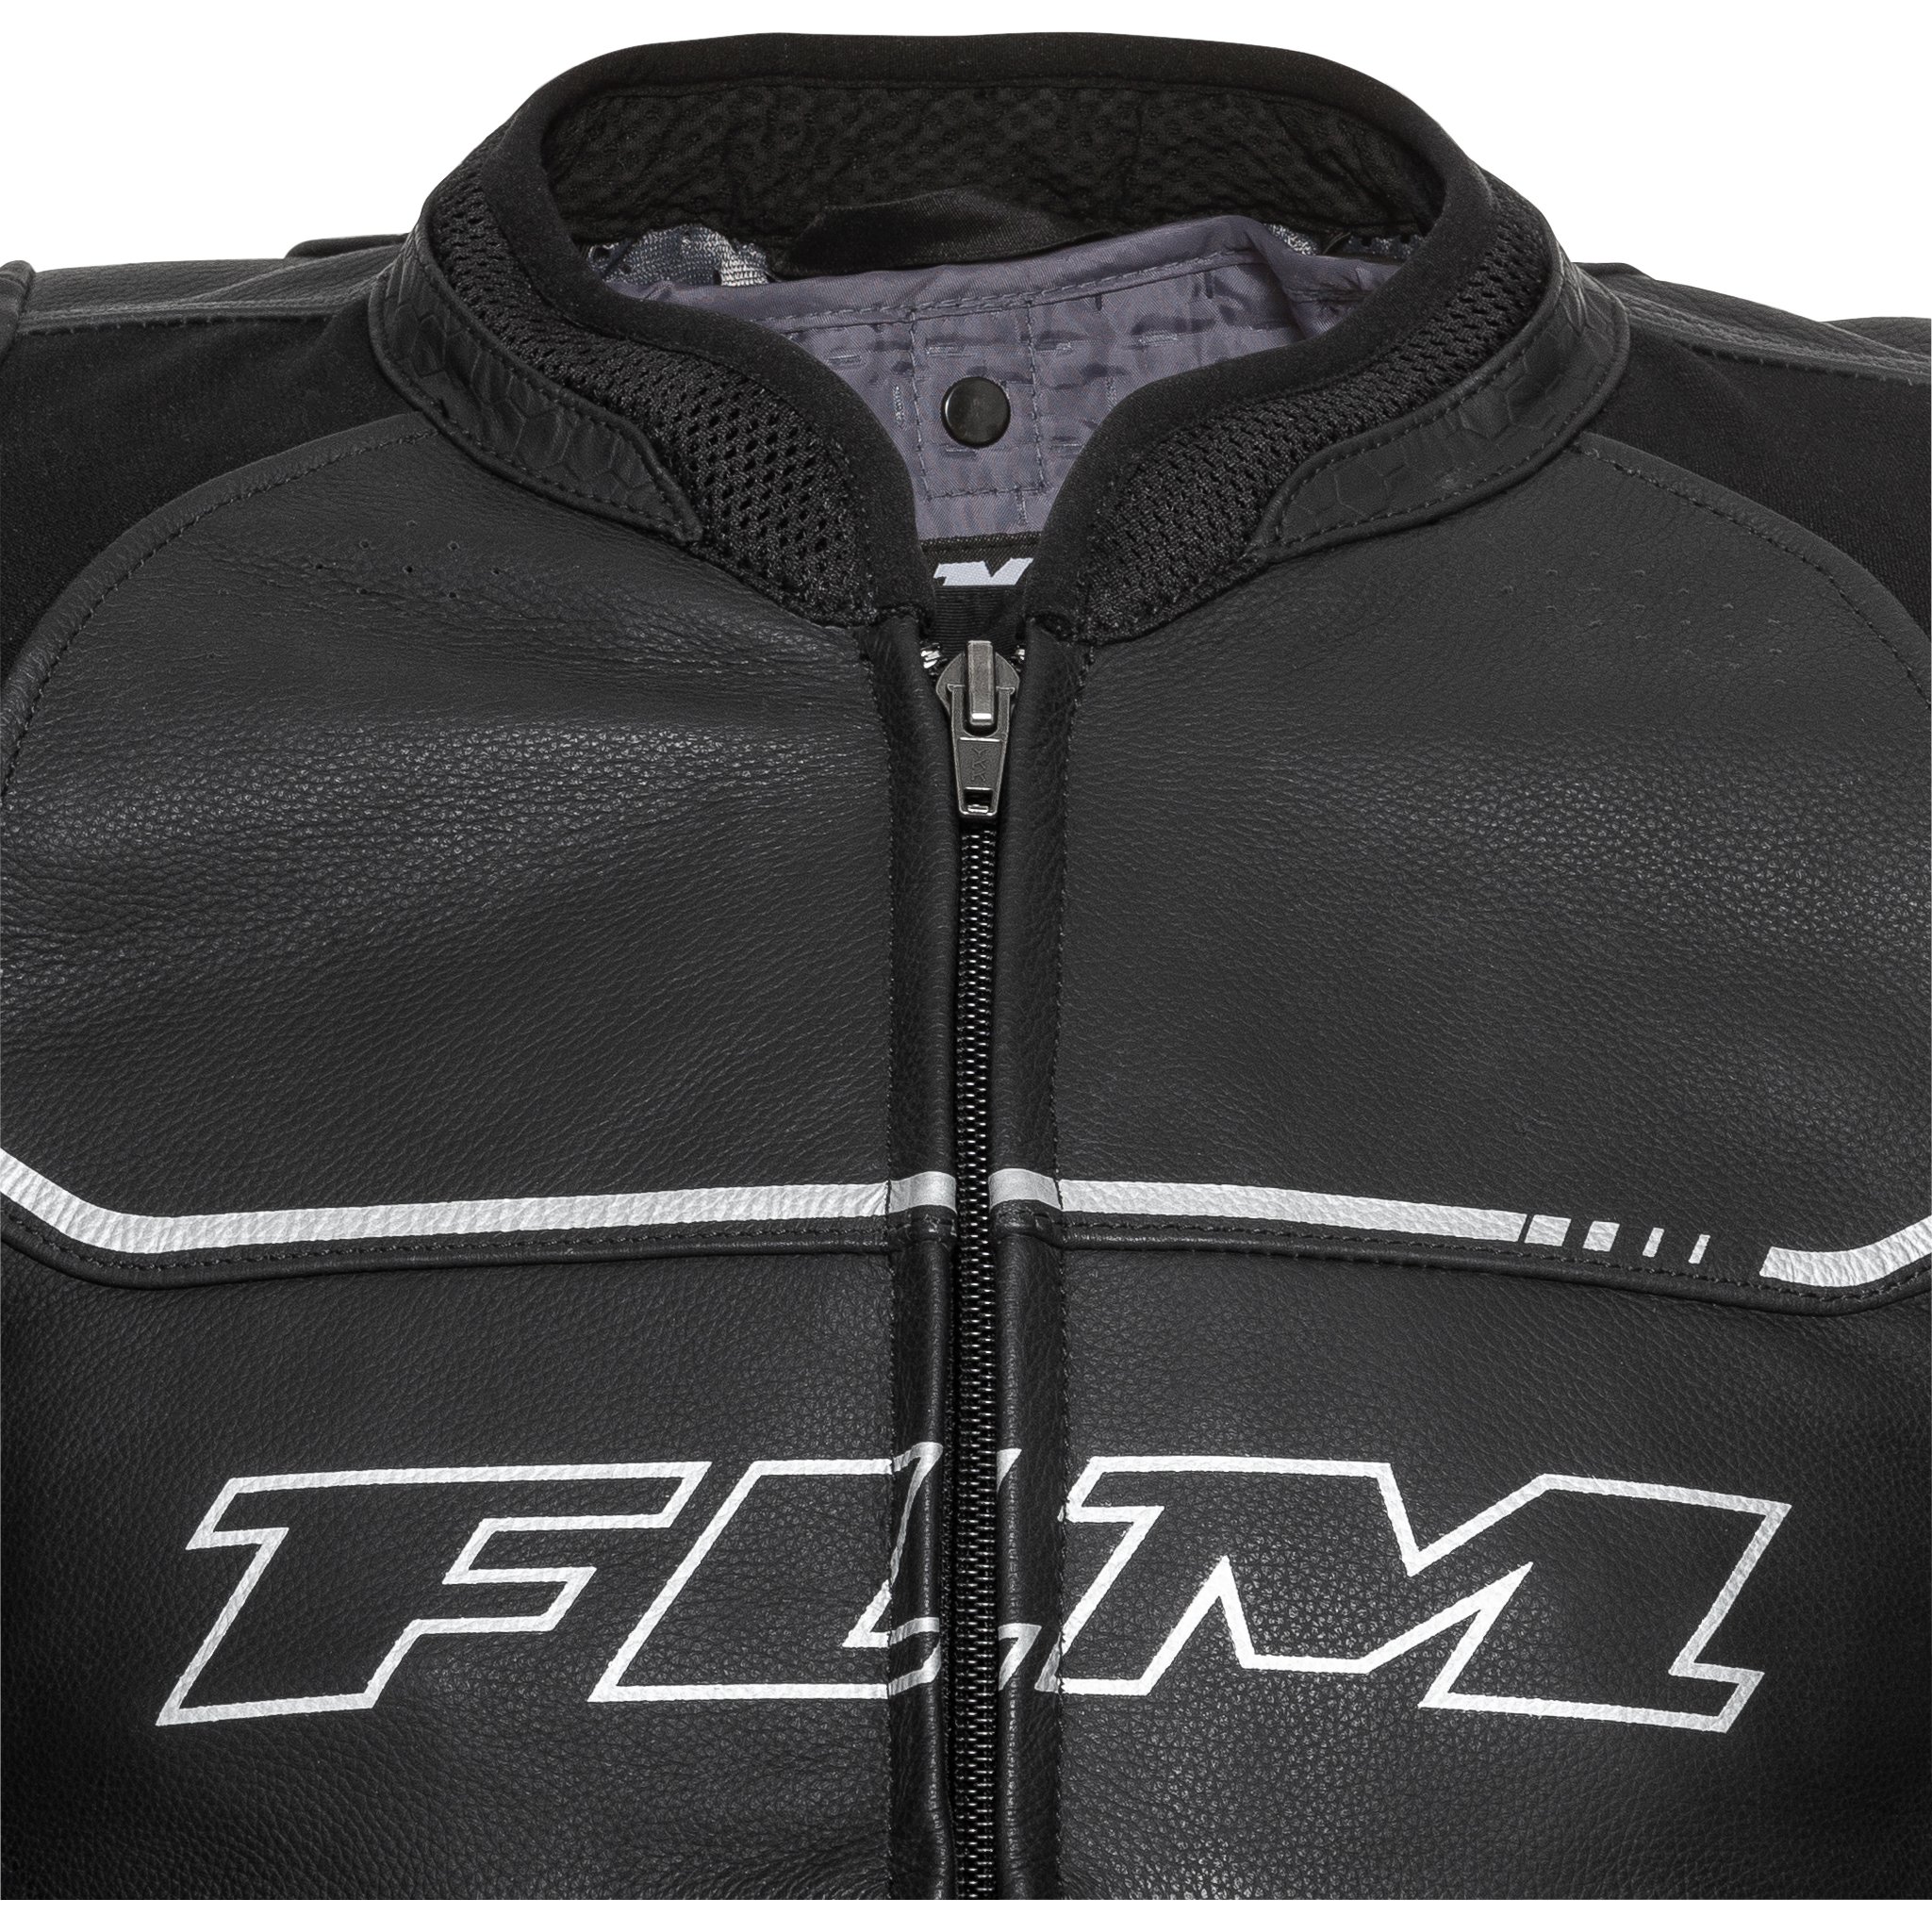 FLM Sports 2 0 Jacket Black